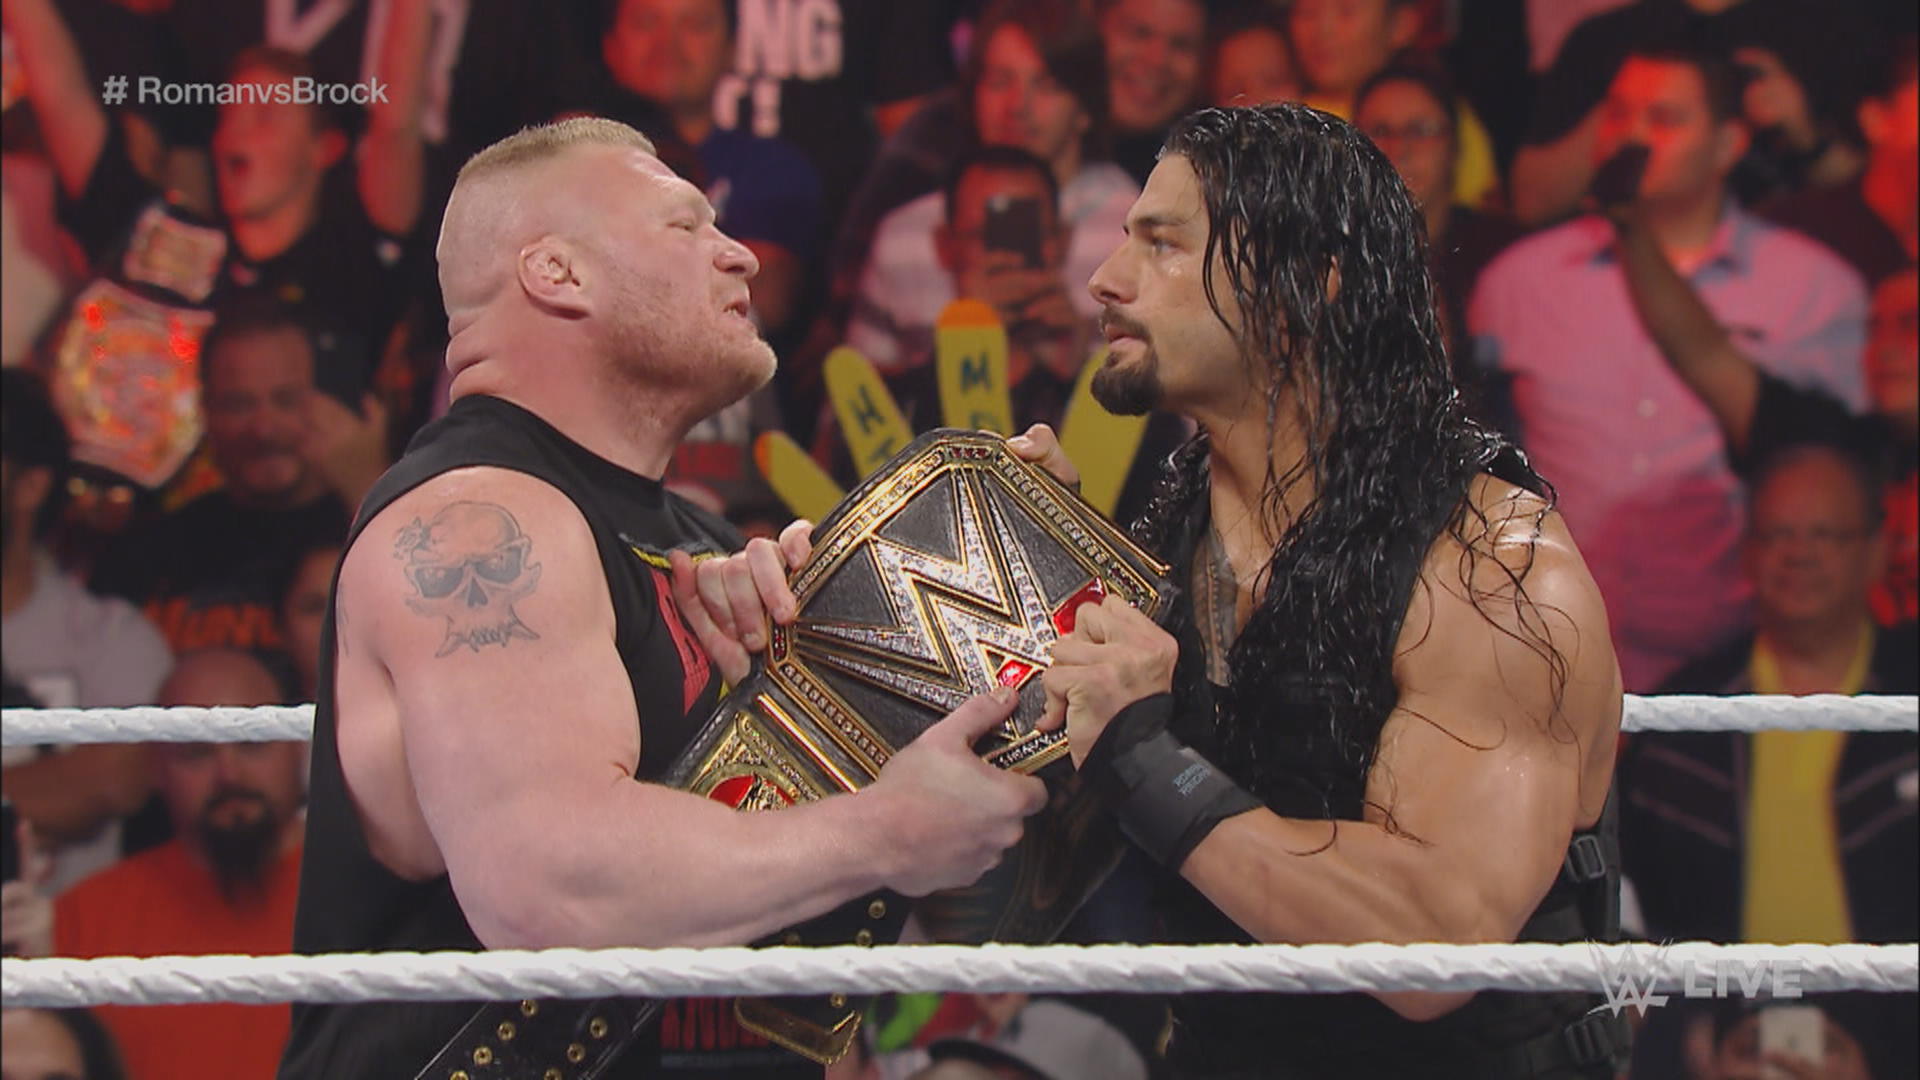 WWE Brock Lesnar and Roman Reigns tug of war 